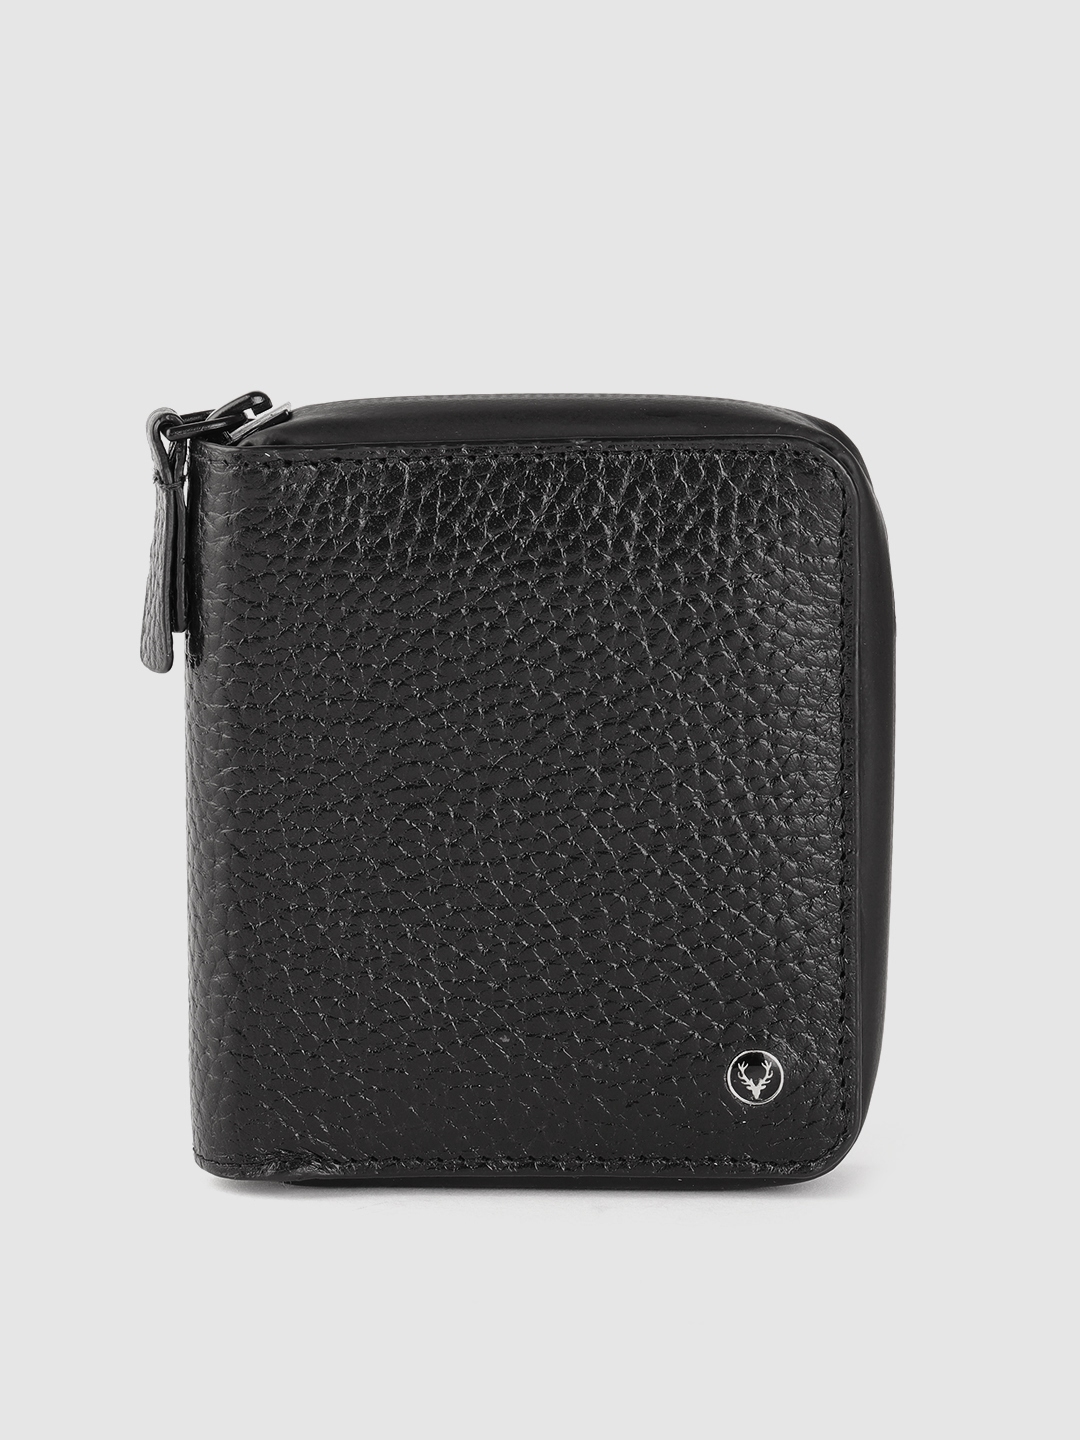 Allen Solly Men Black Genuine Leather Wallet